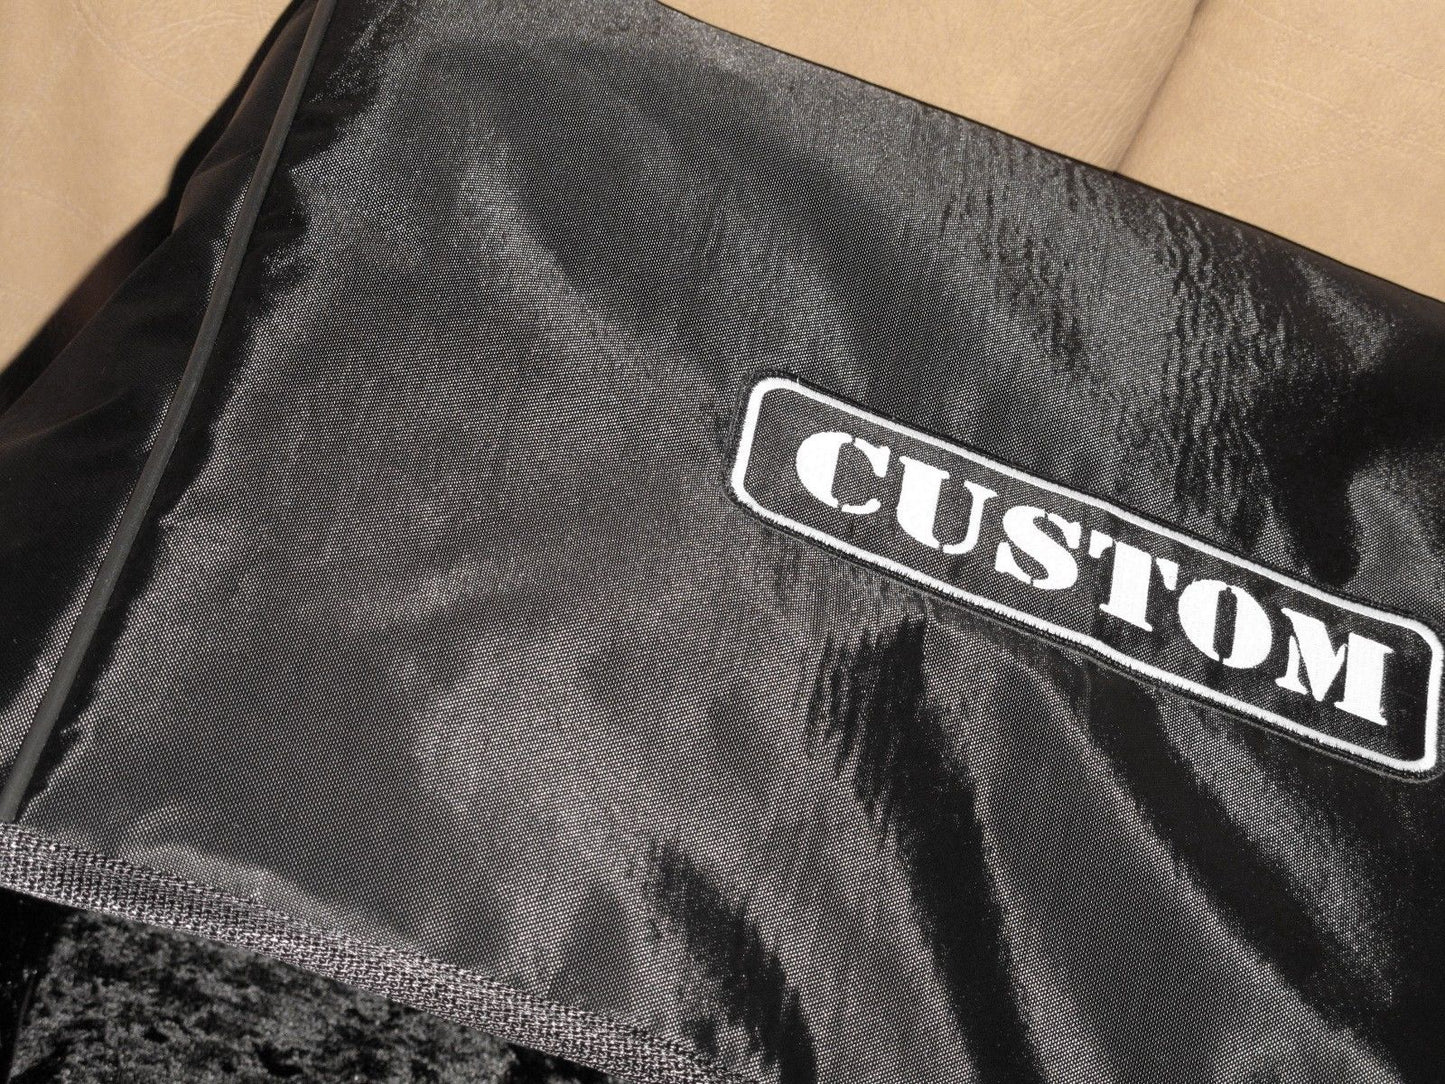 Custom padded cover for Two-Rock Studio Pro 22 combo amp